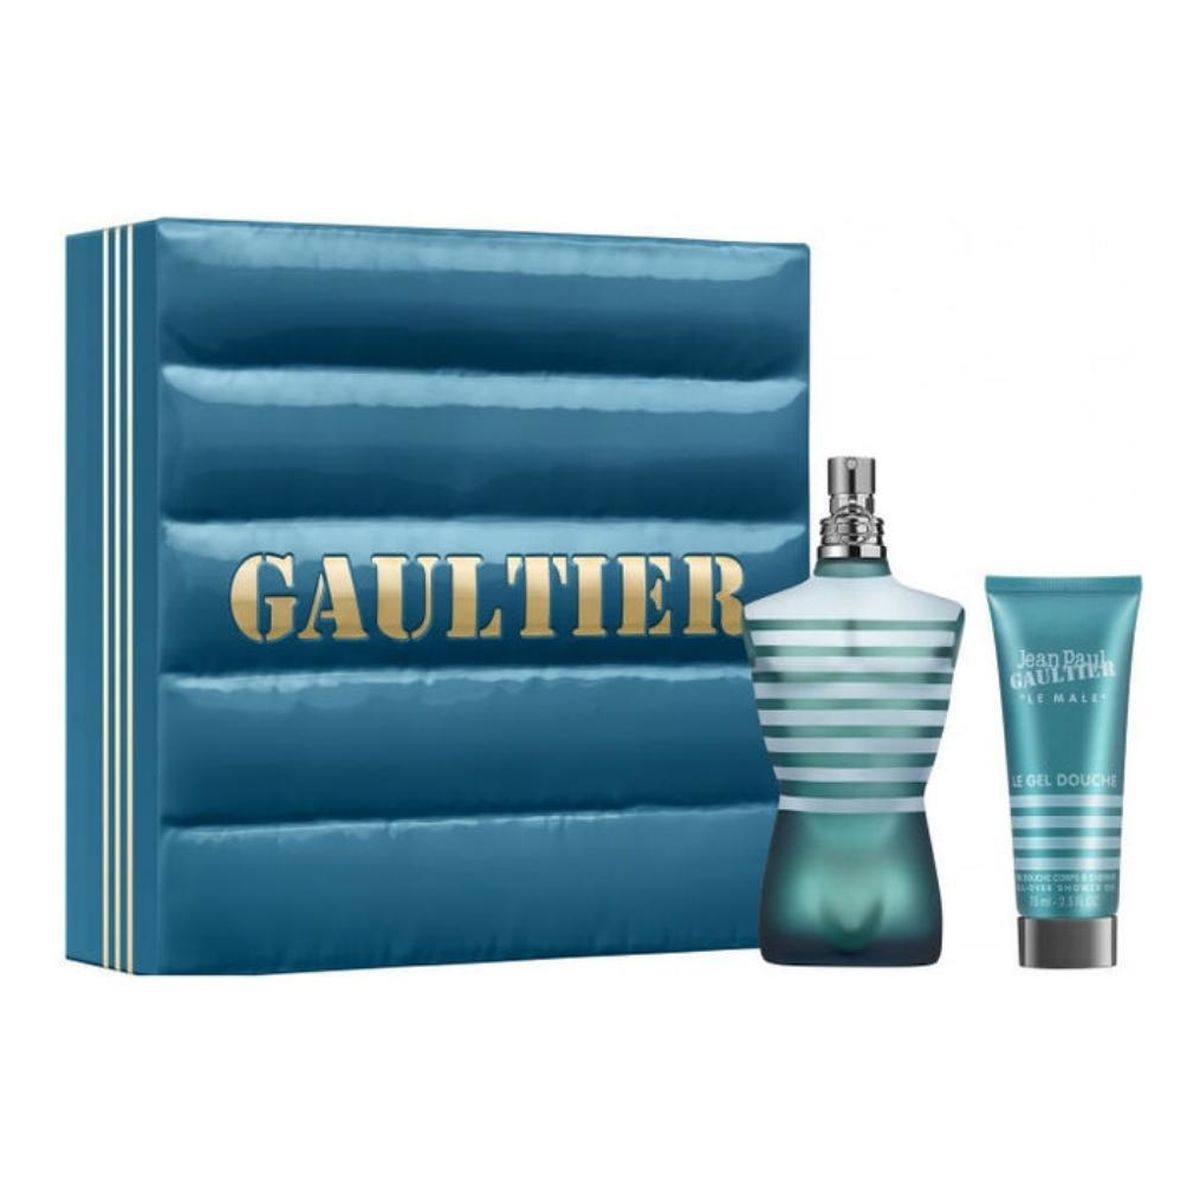 Jean Paul Gaultier Le Male Zestaw woda toaletowa spray 125ml + żel pod prysznic 75ml